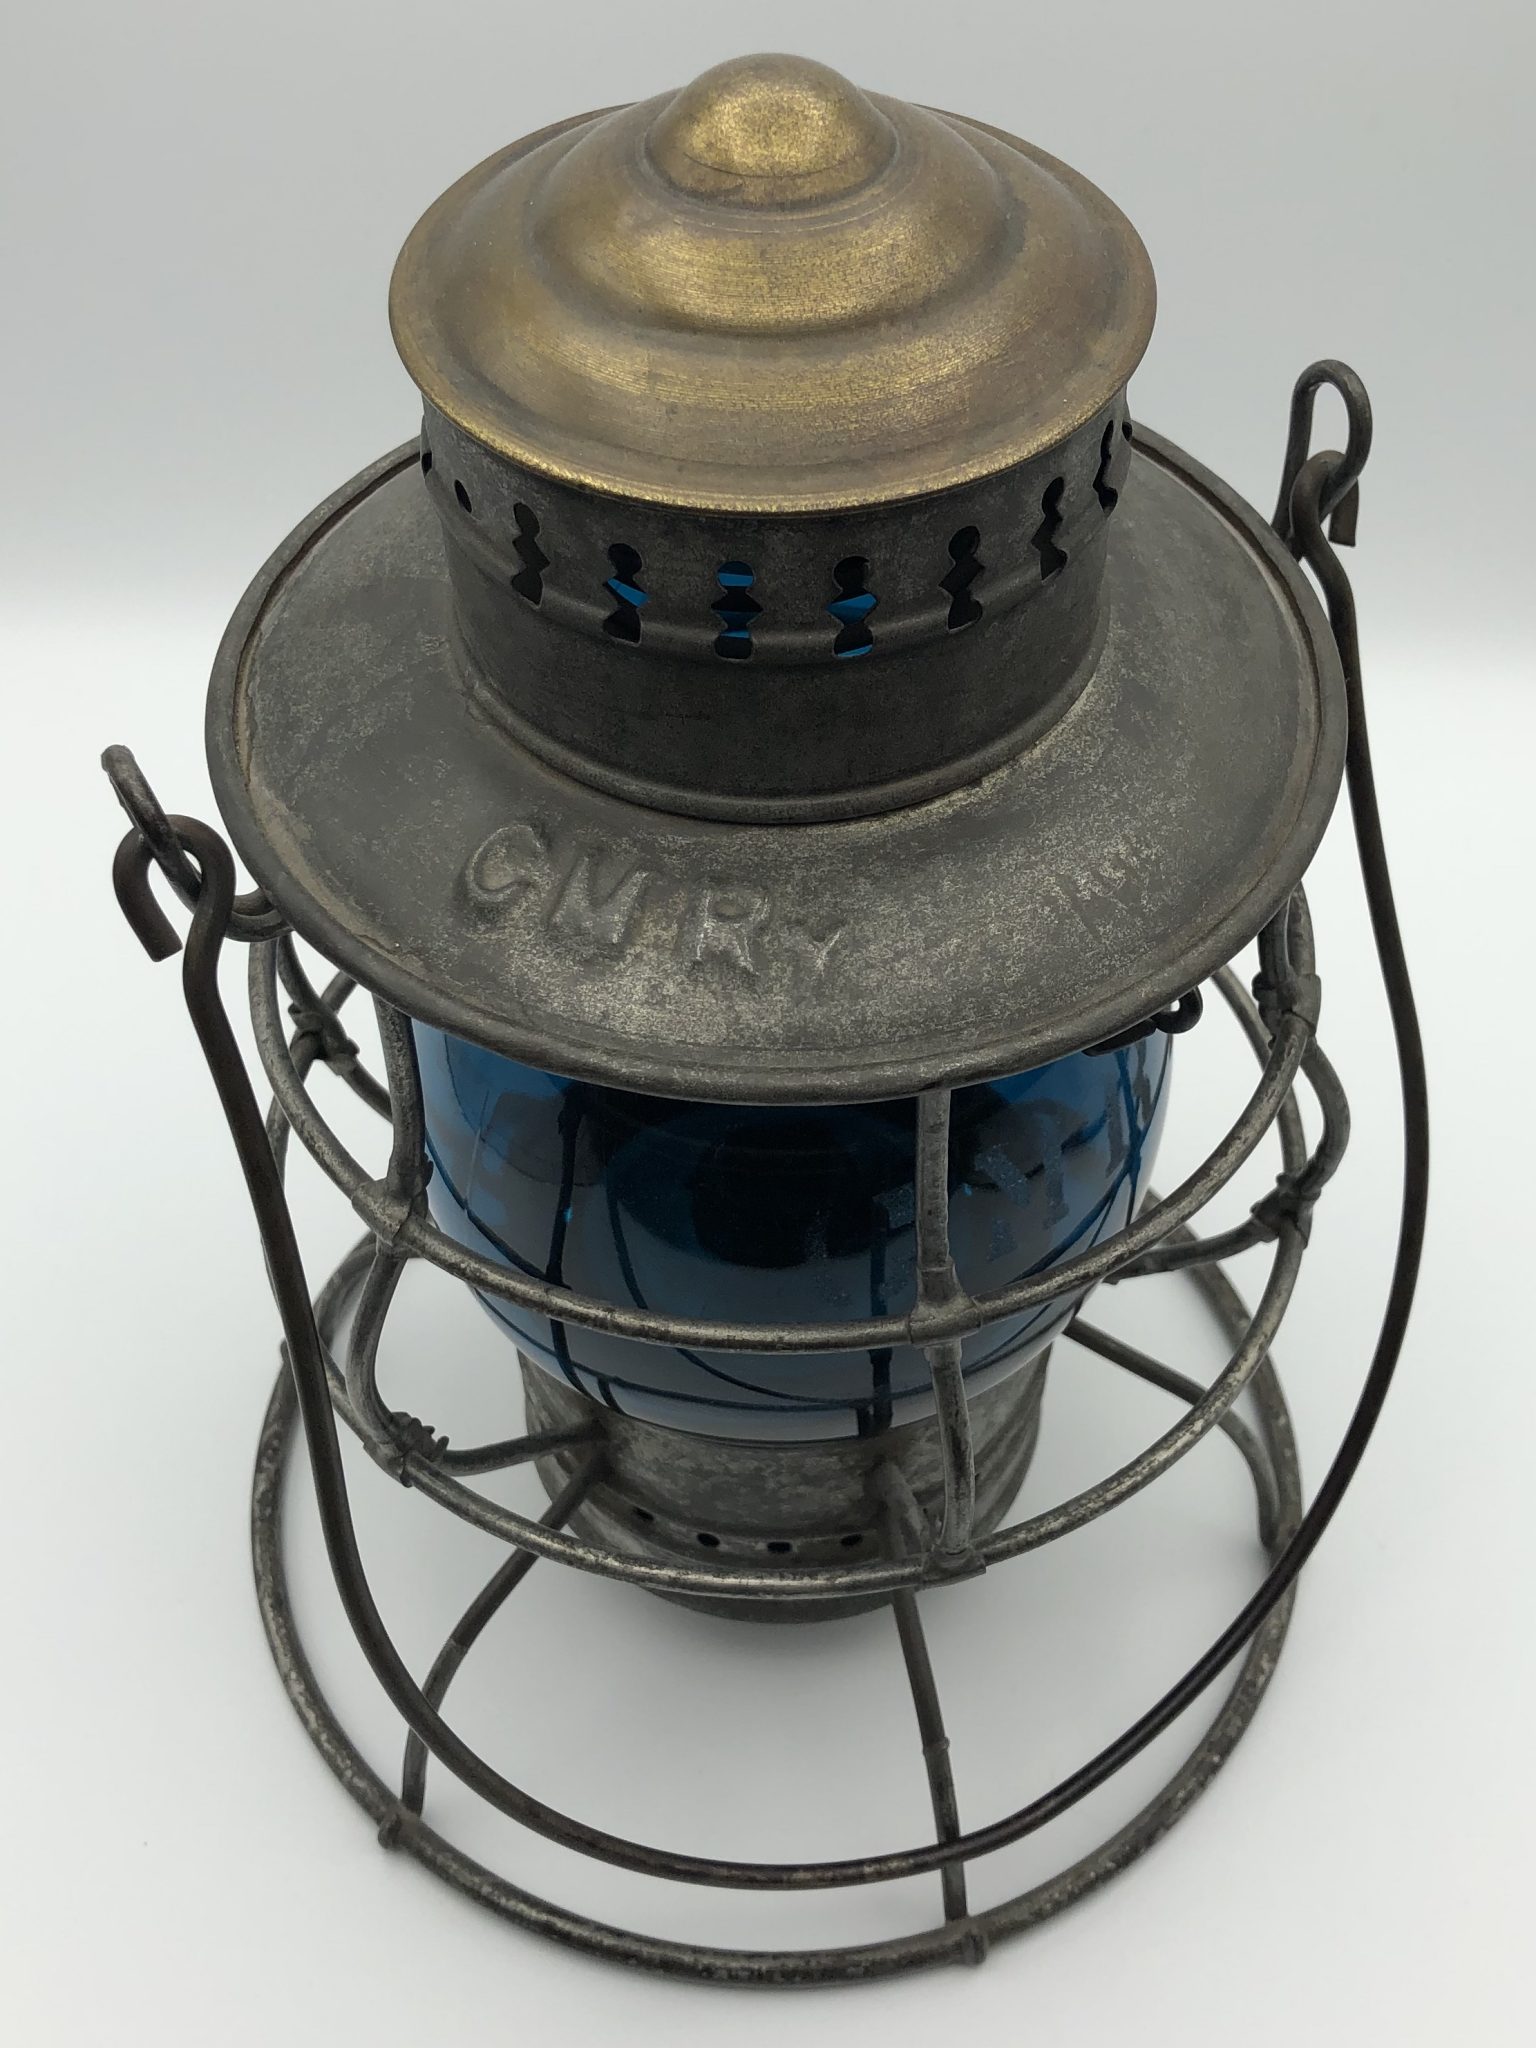 CMRY Brasstop Railroad Lantern